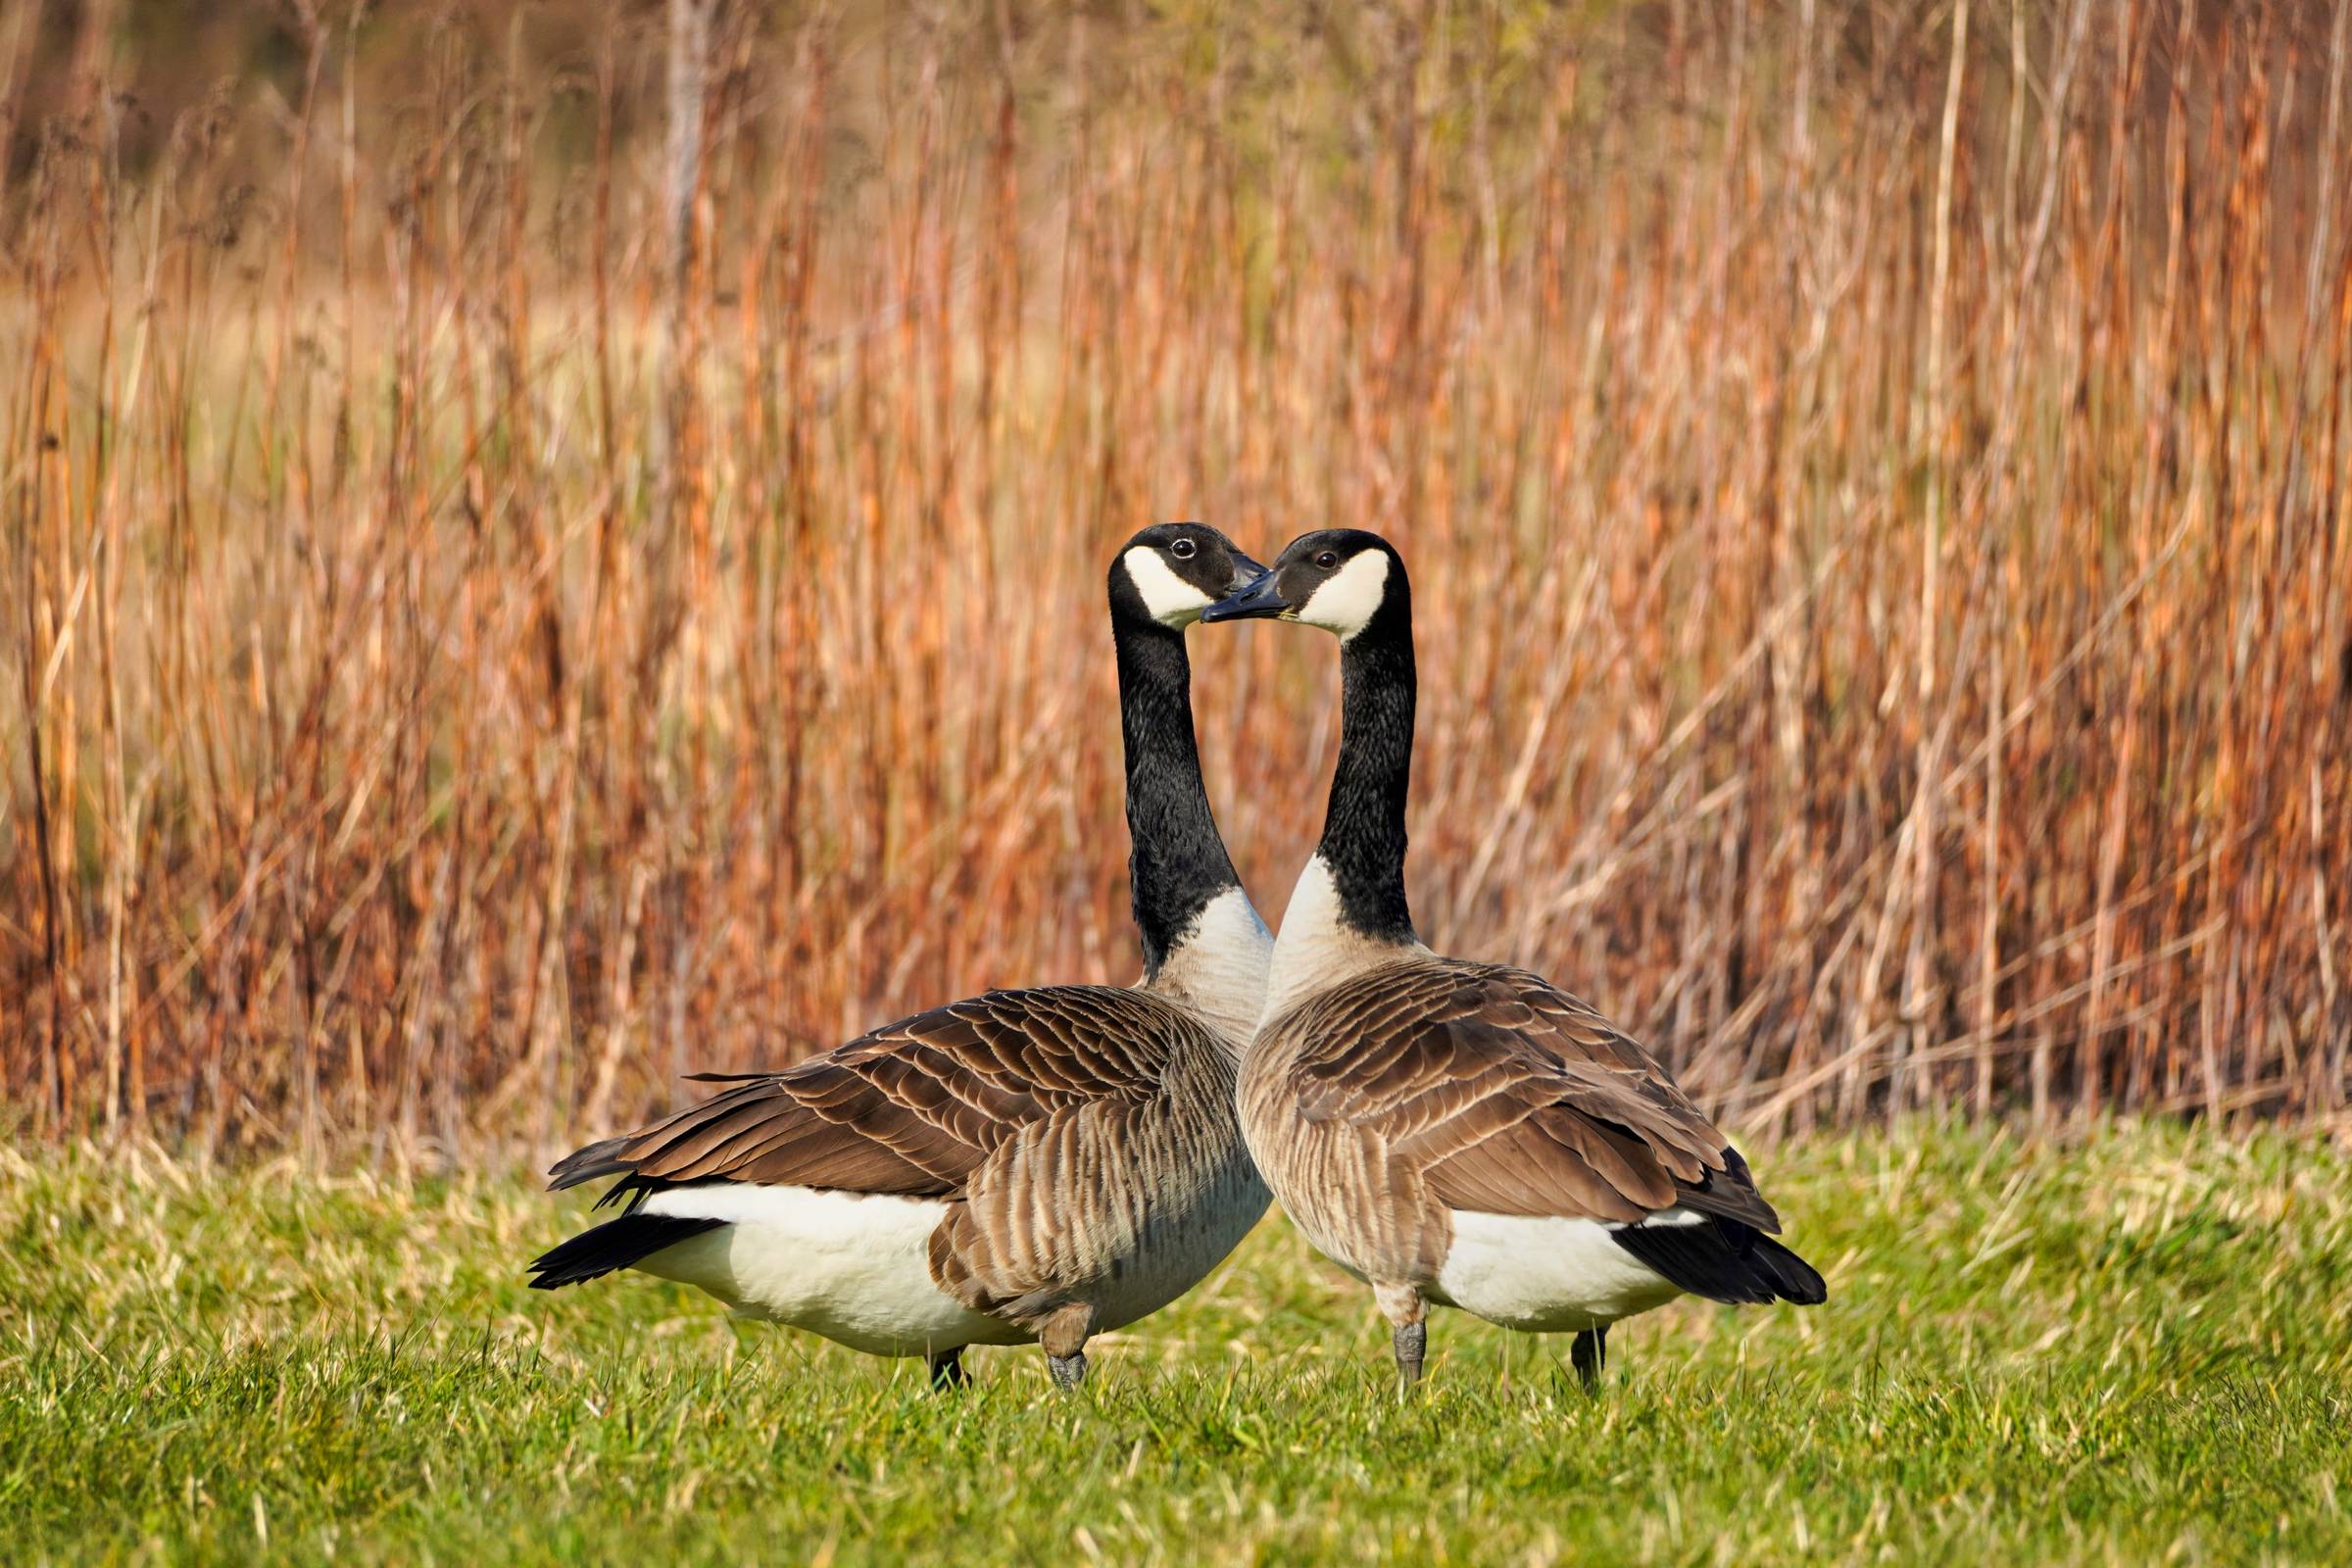 Canada goose species portrait